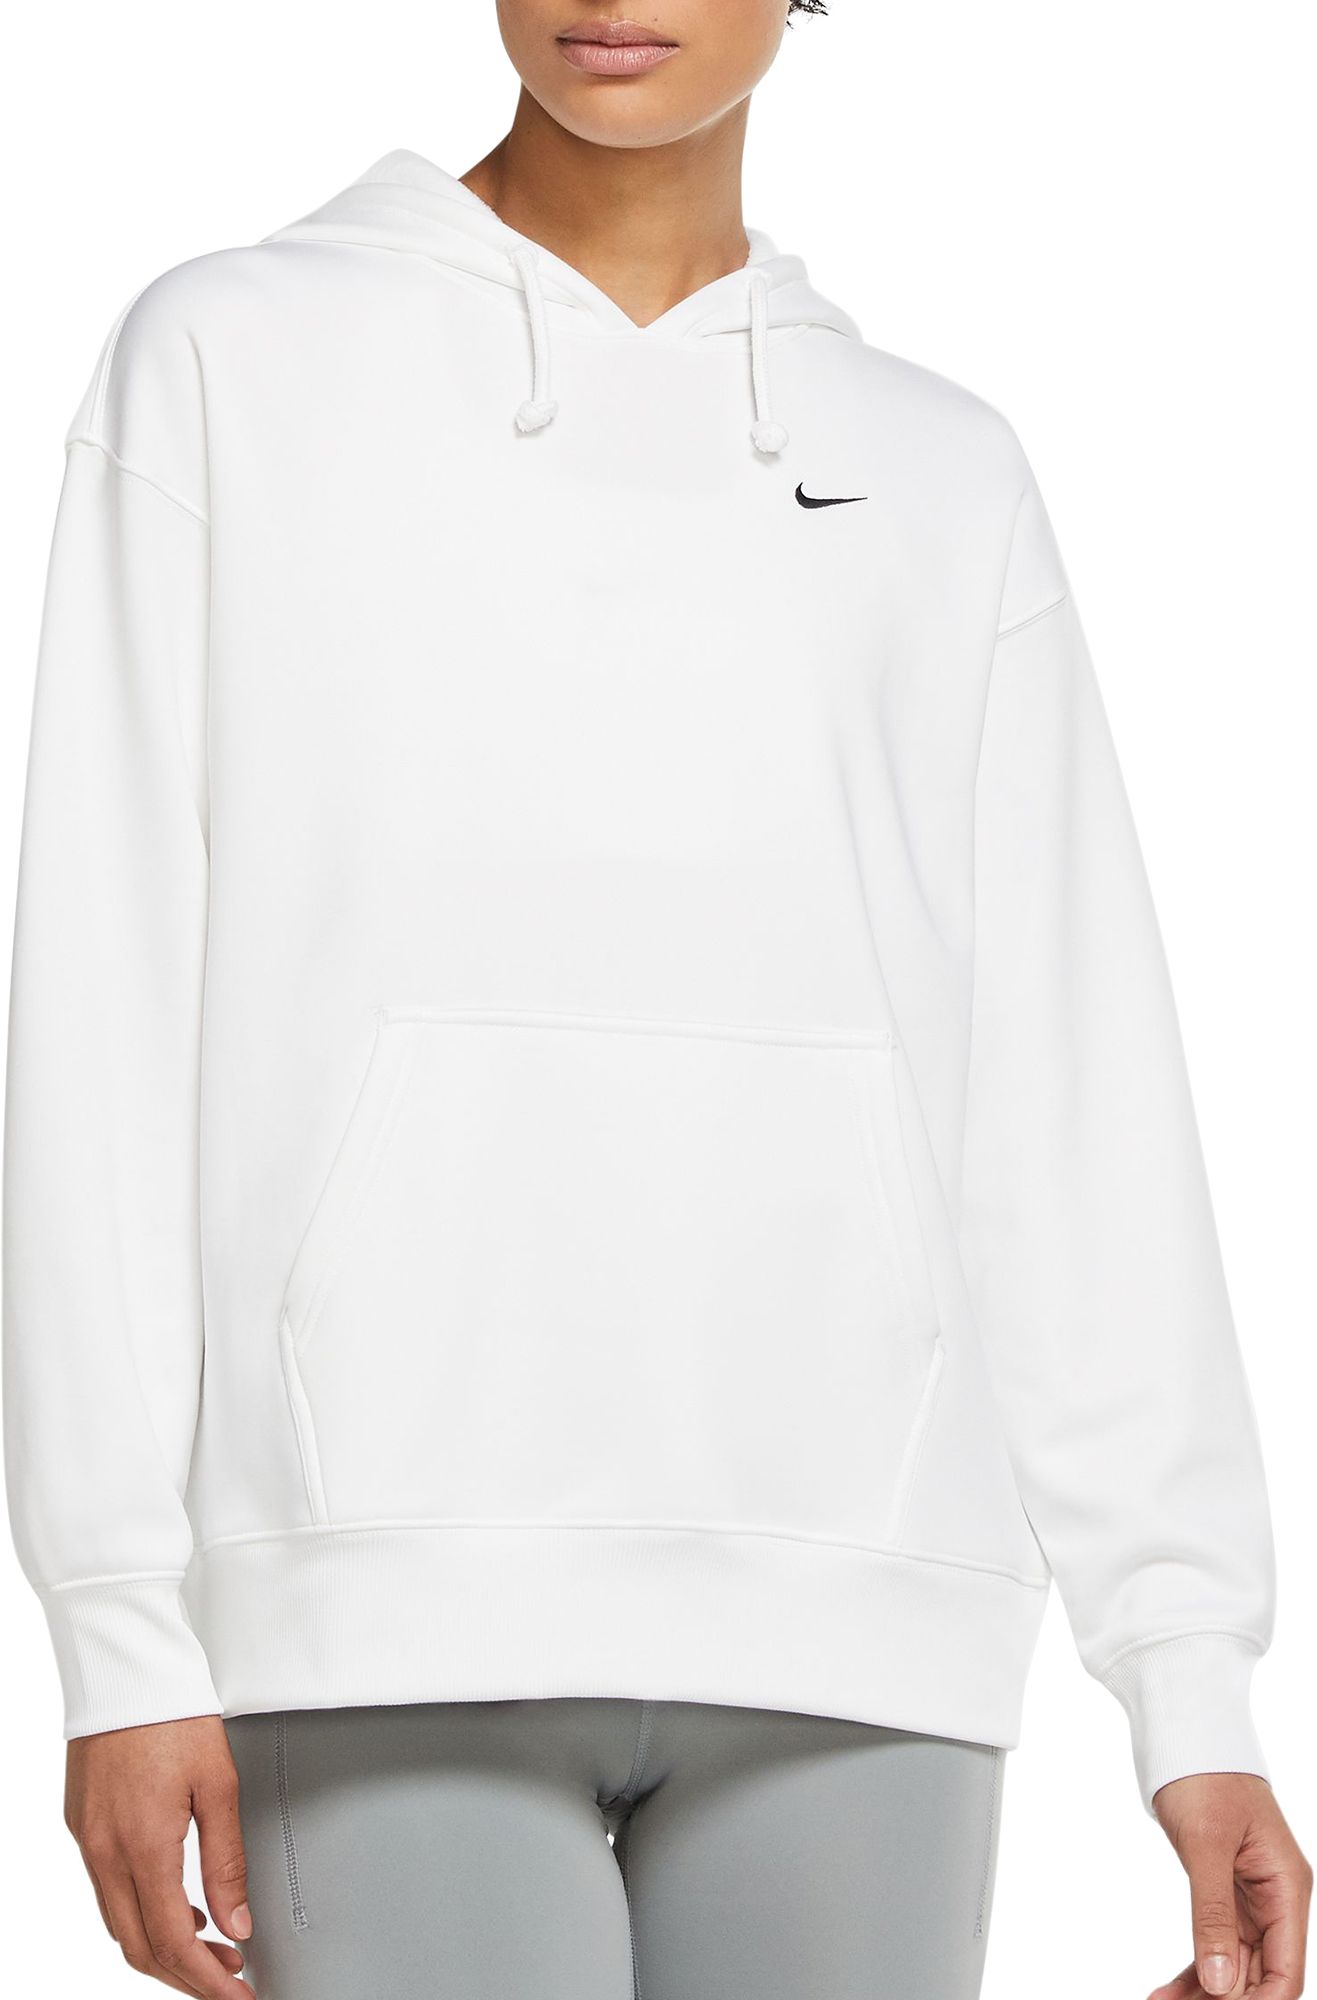 youth white nike hoodie